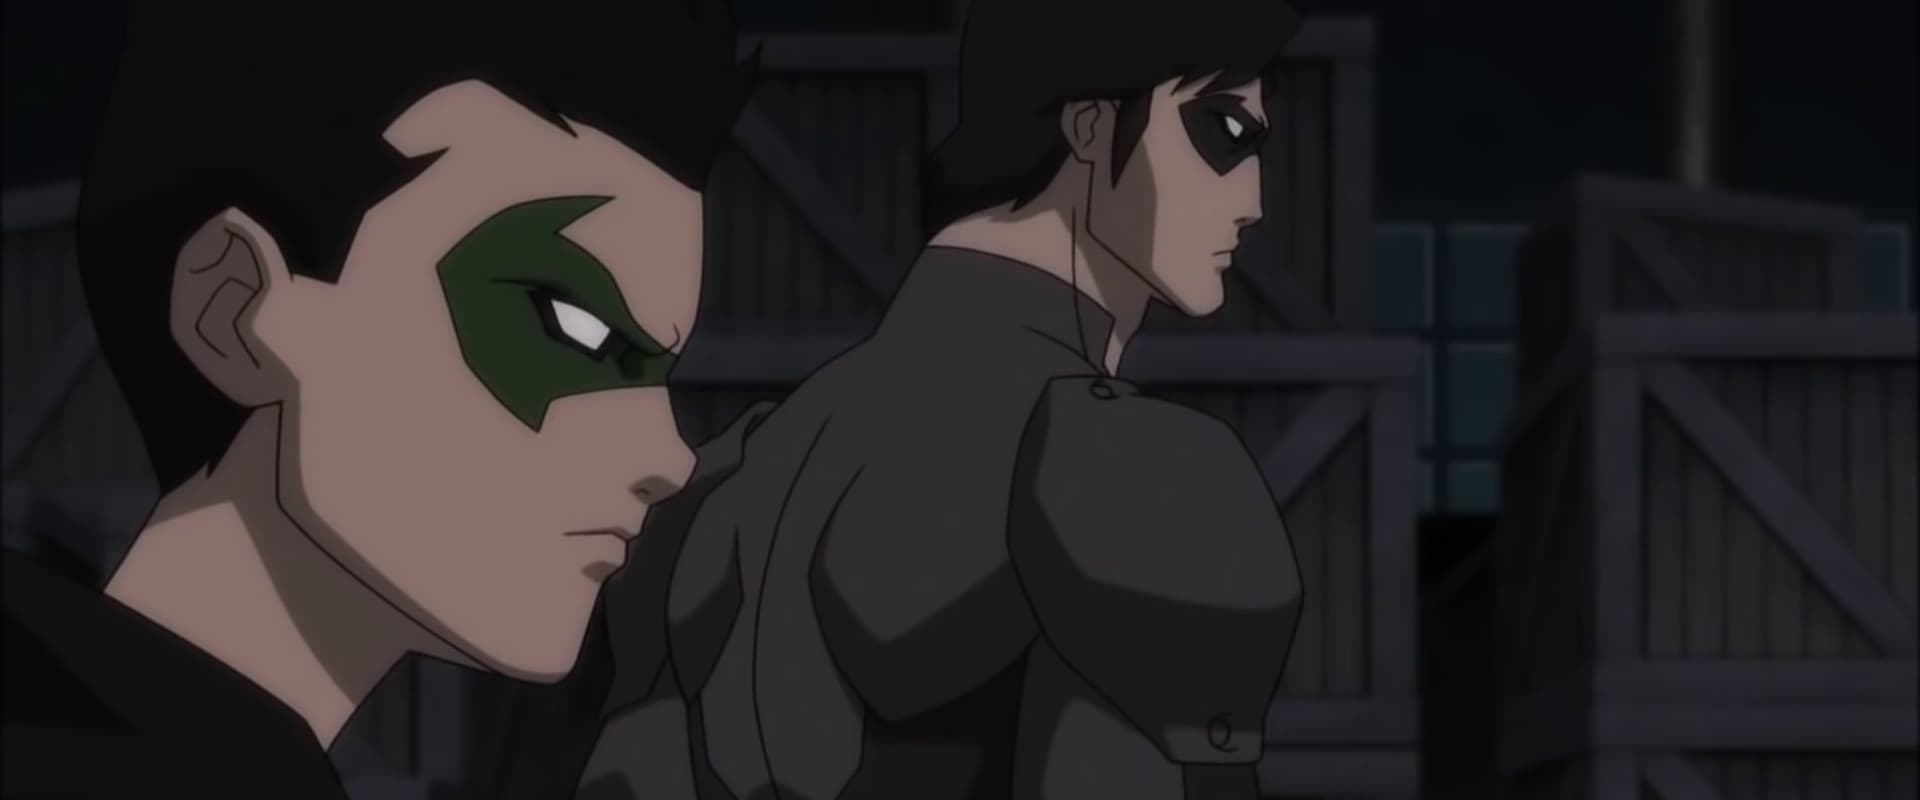 Nightwing and Robin